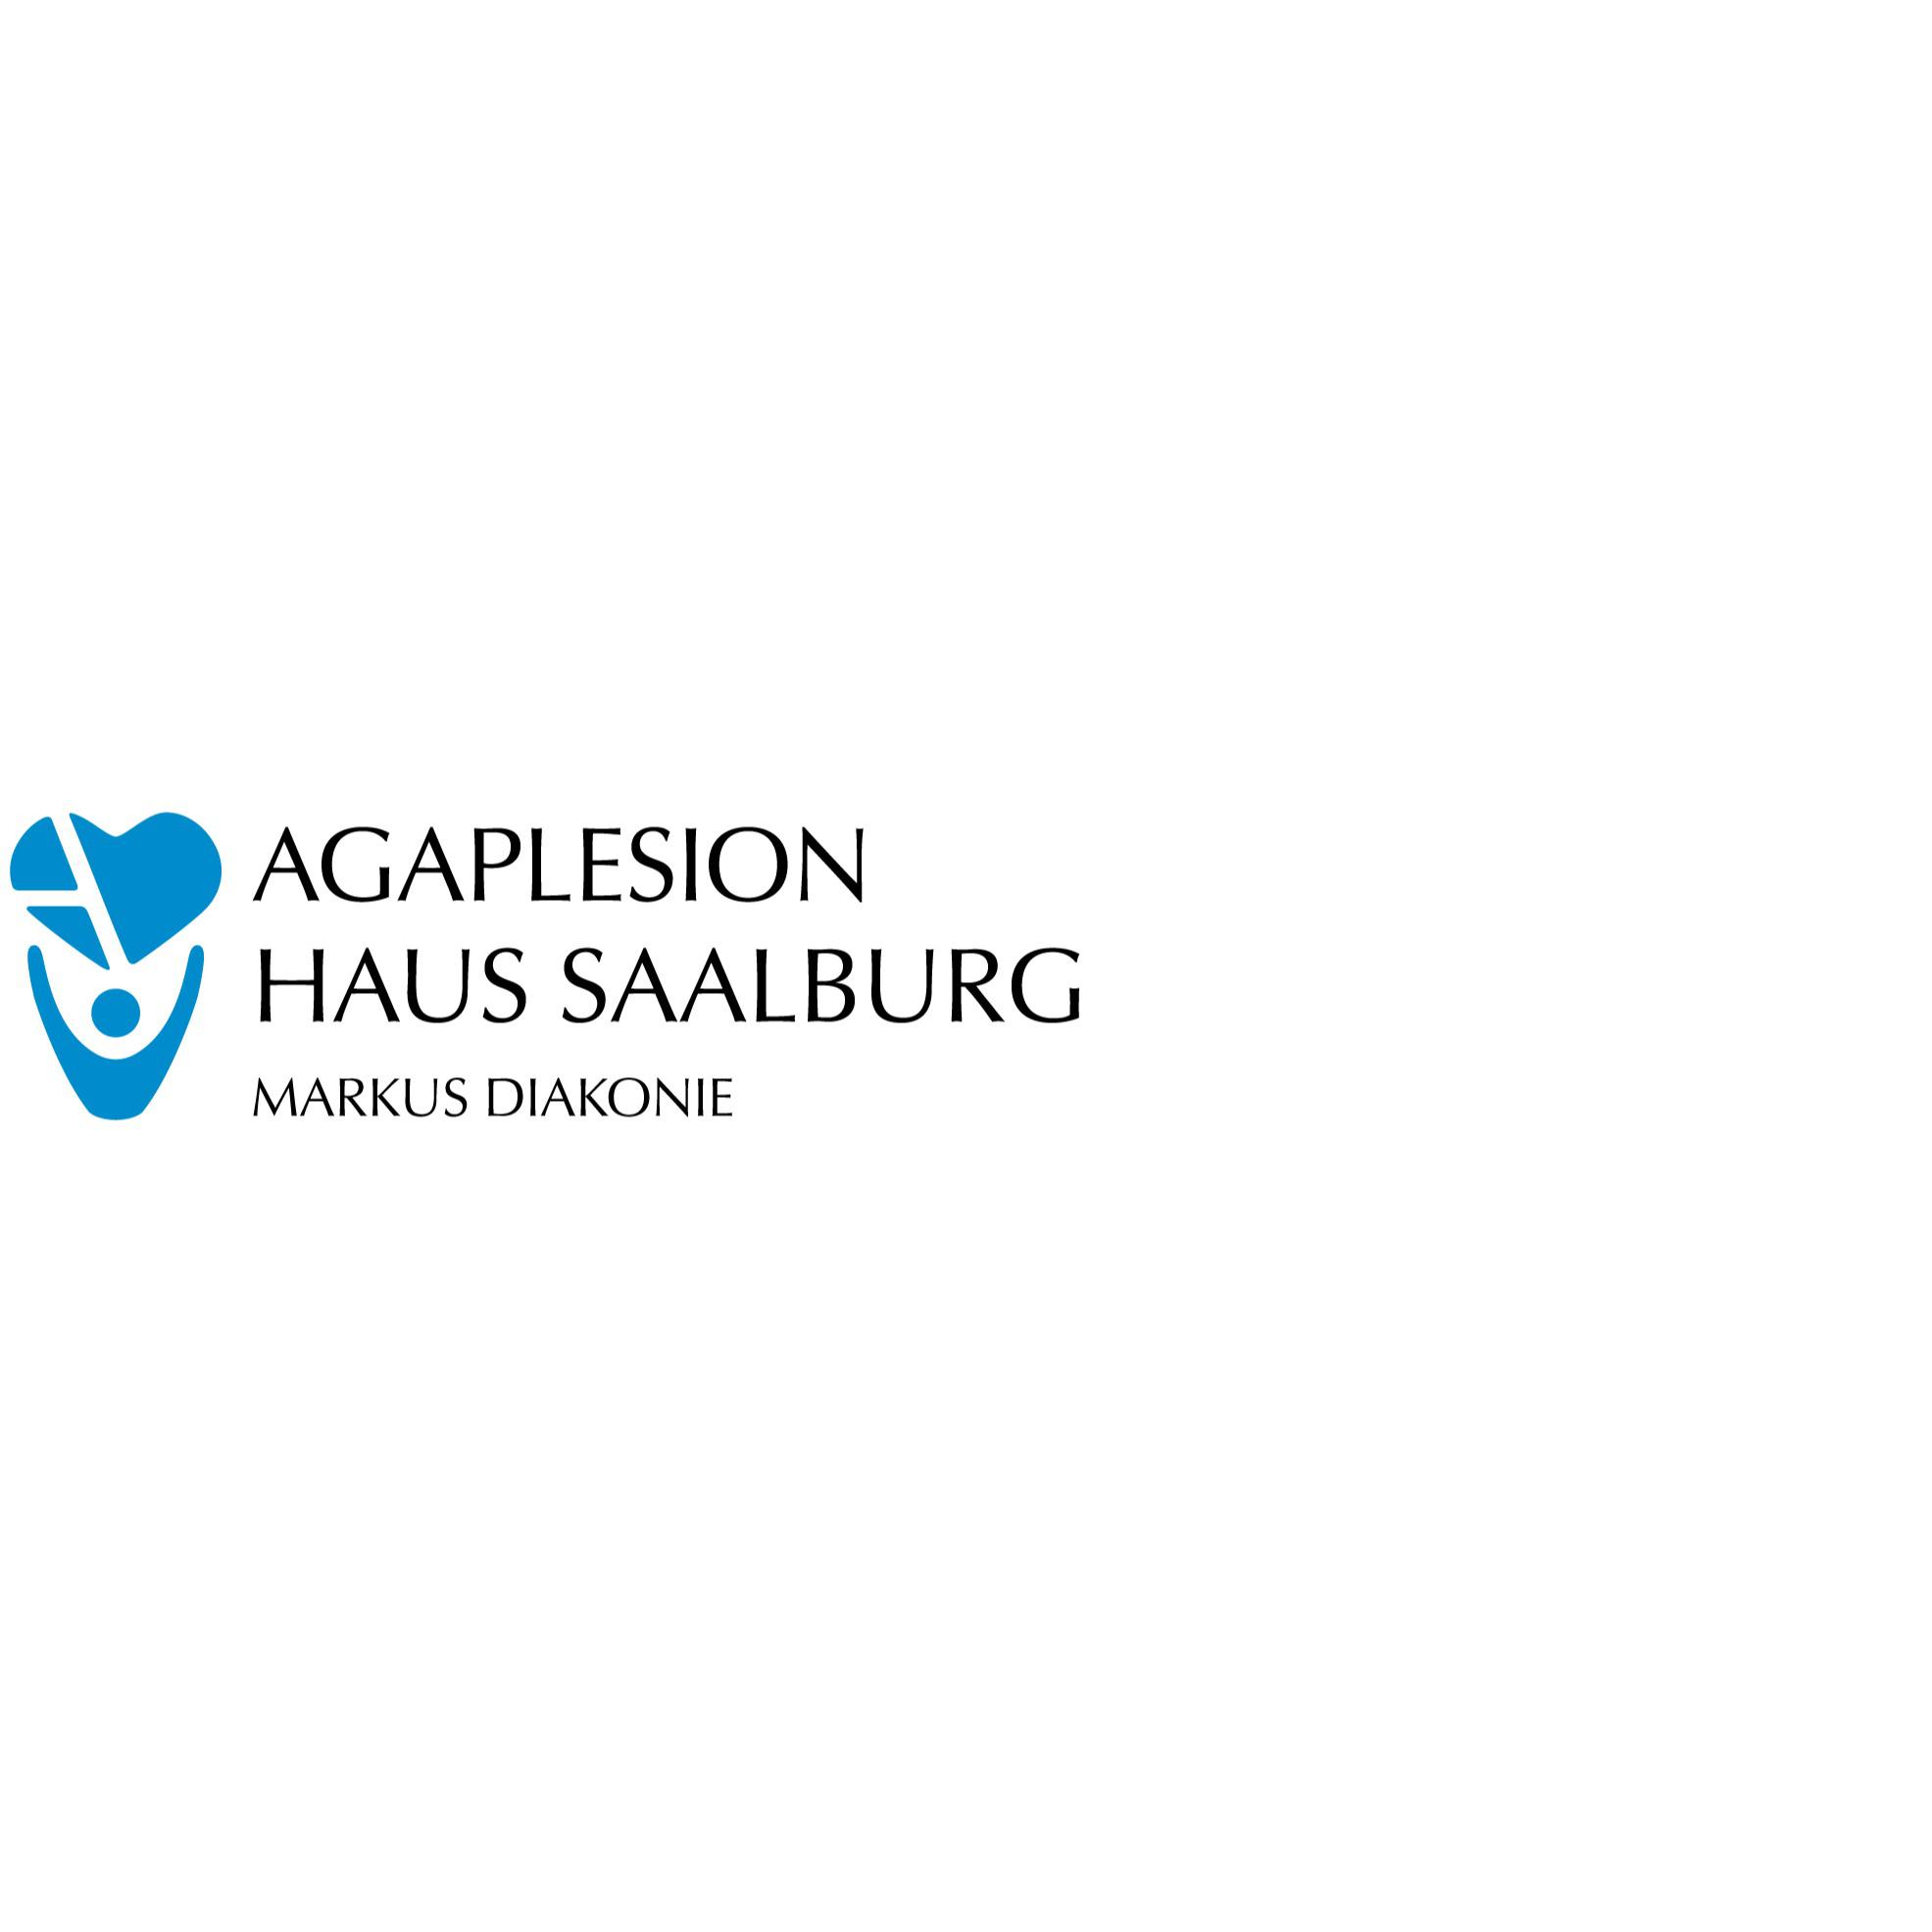 AGAPLESION HAUS SAALBURG in Frankfurt am Main - Logo